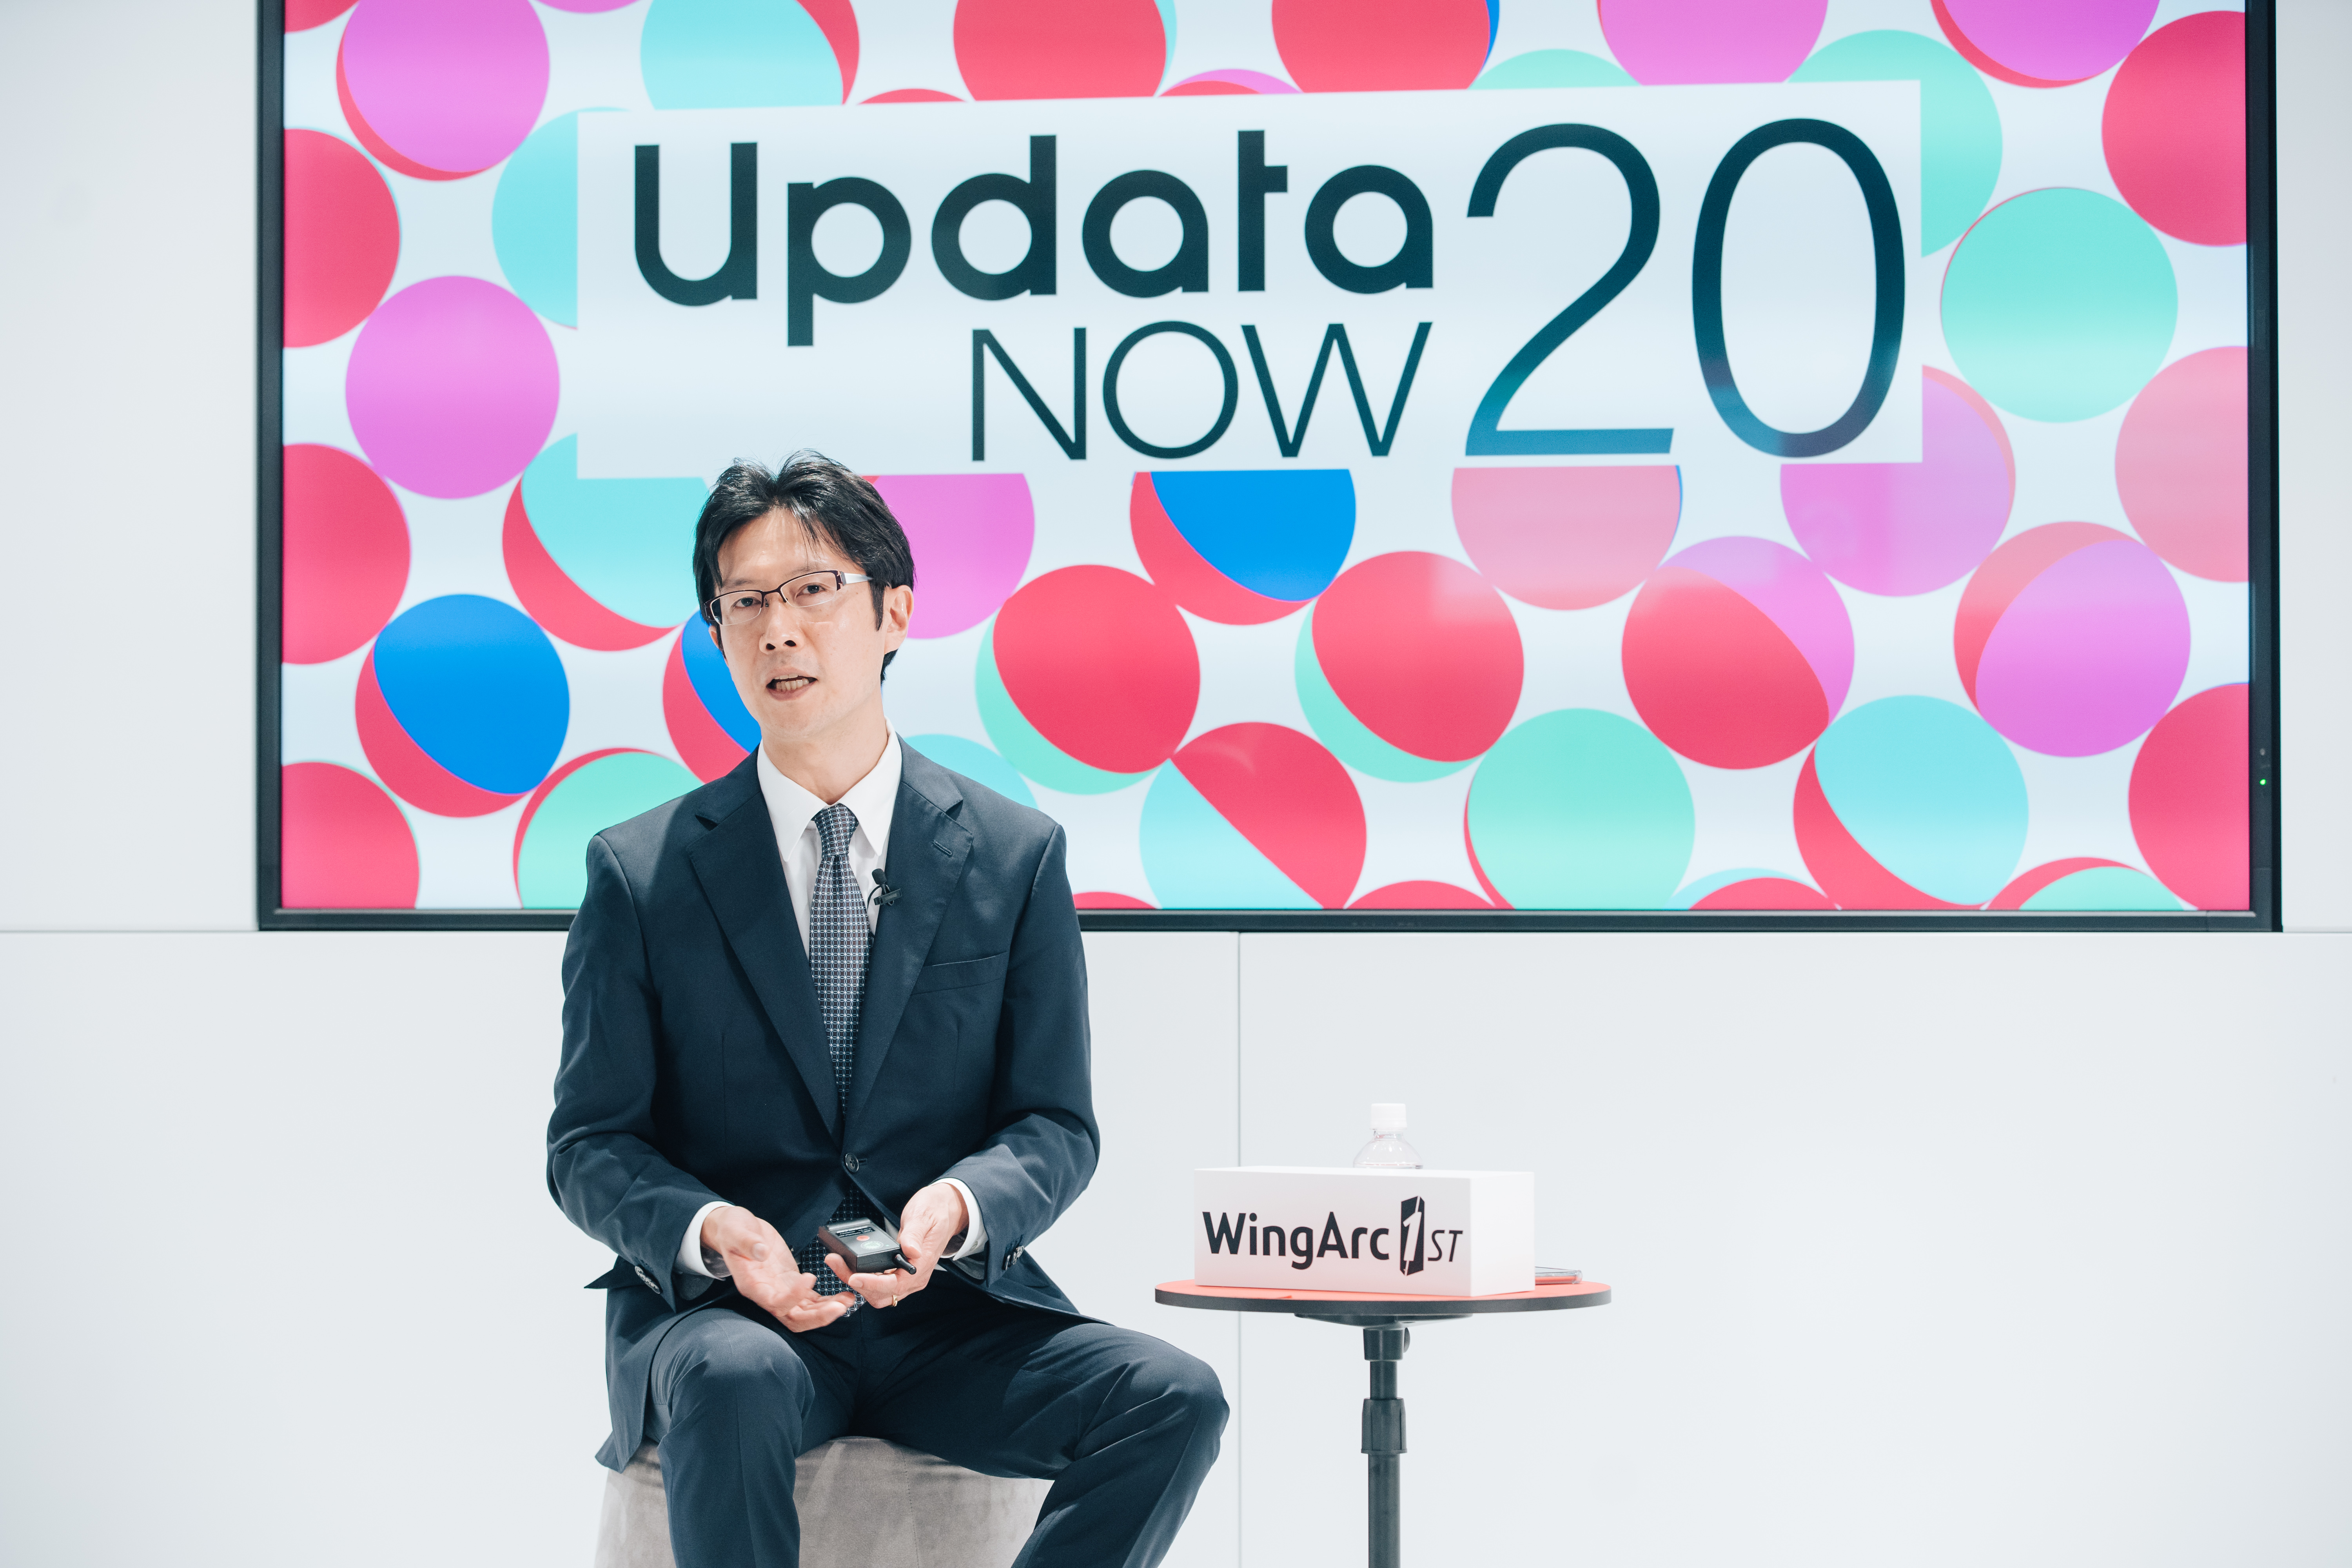 「updataNOW 20」にて常務執行役員 小野 和俊が登壇しました